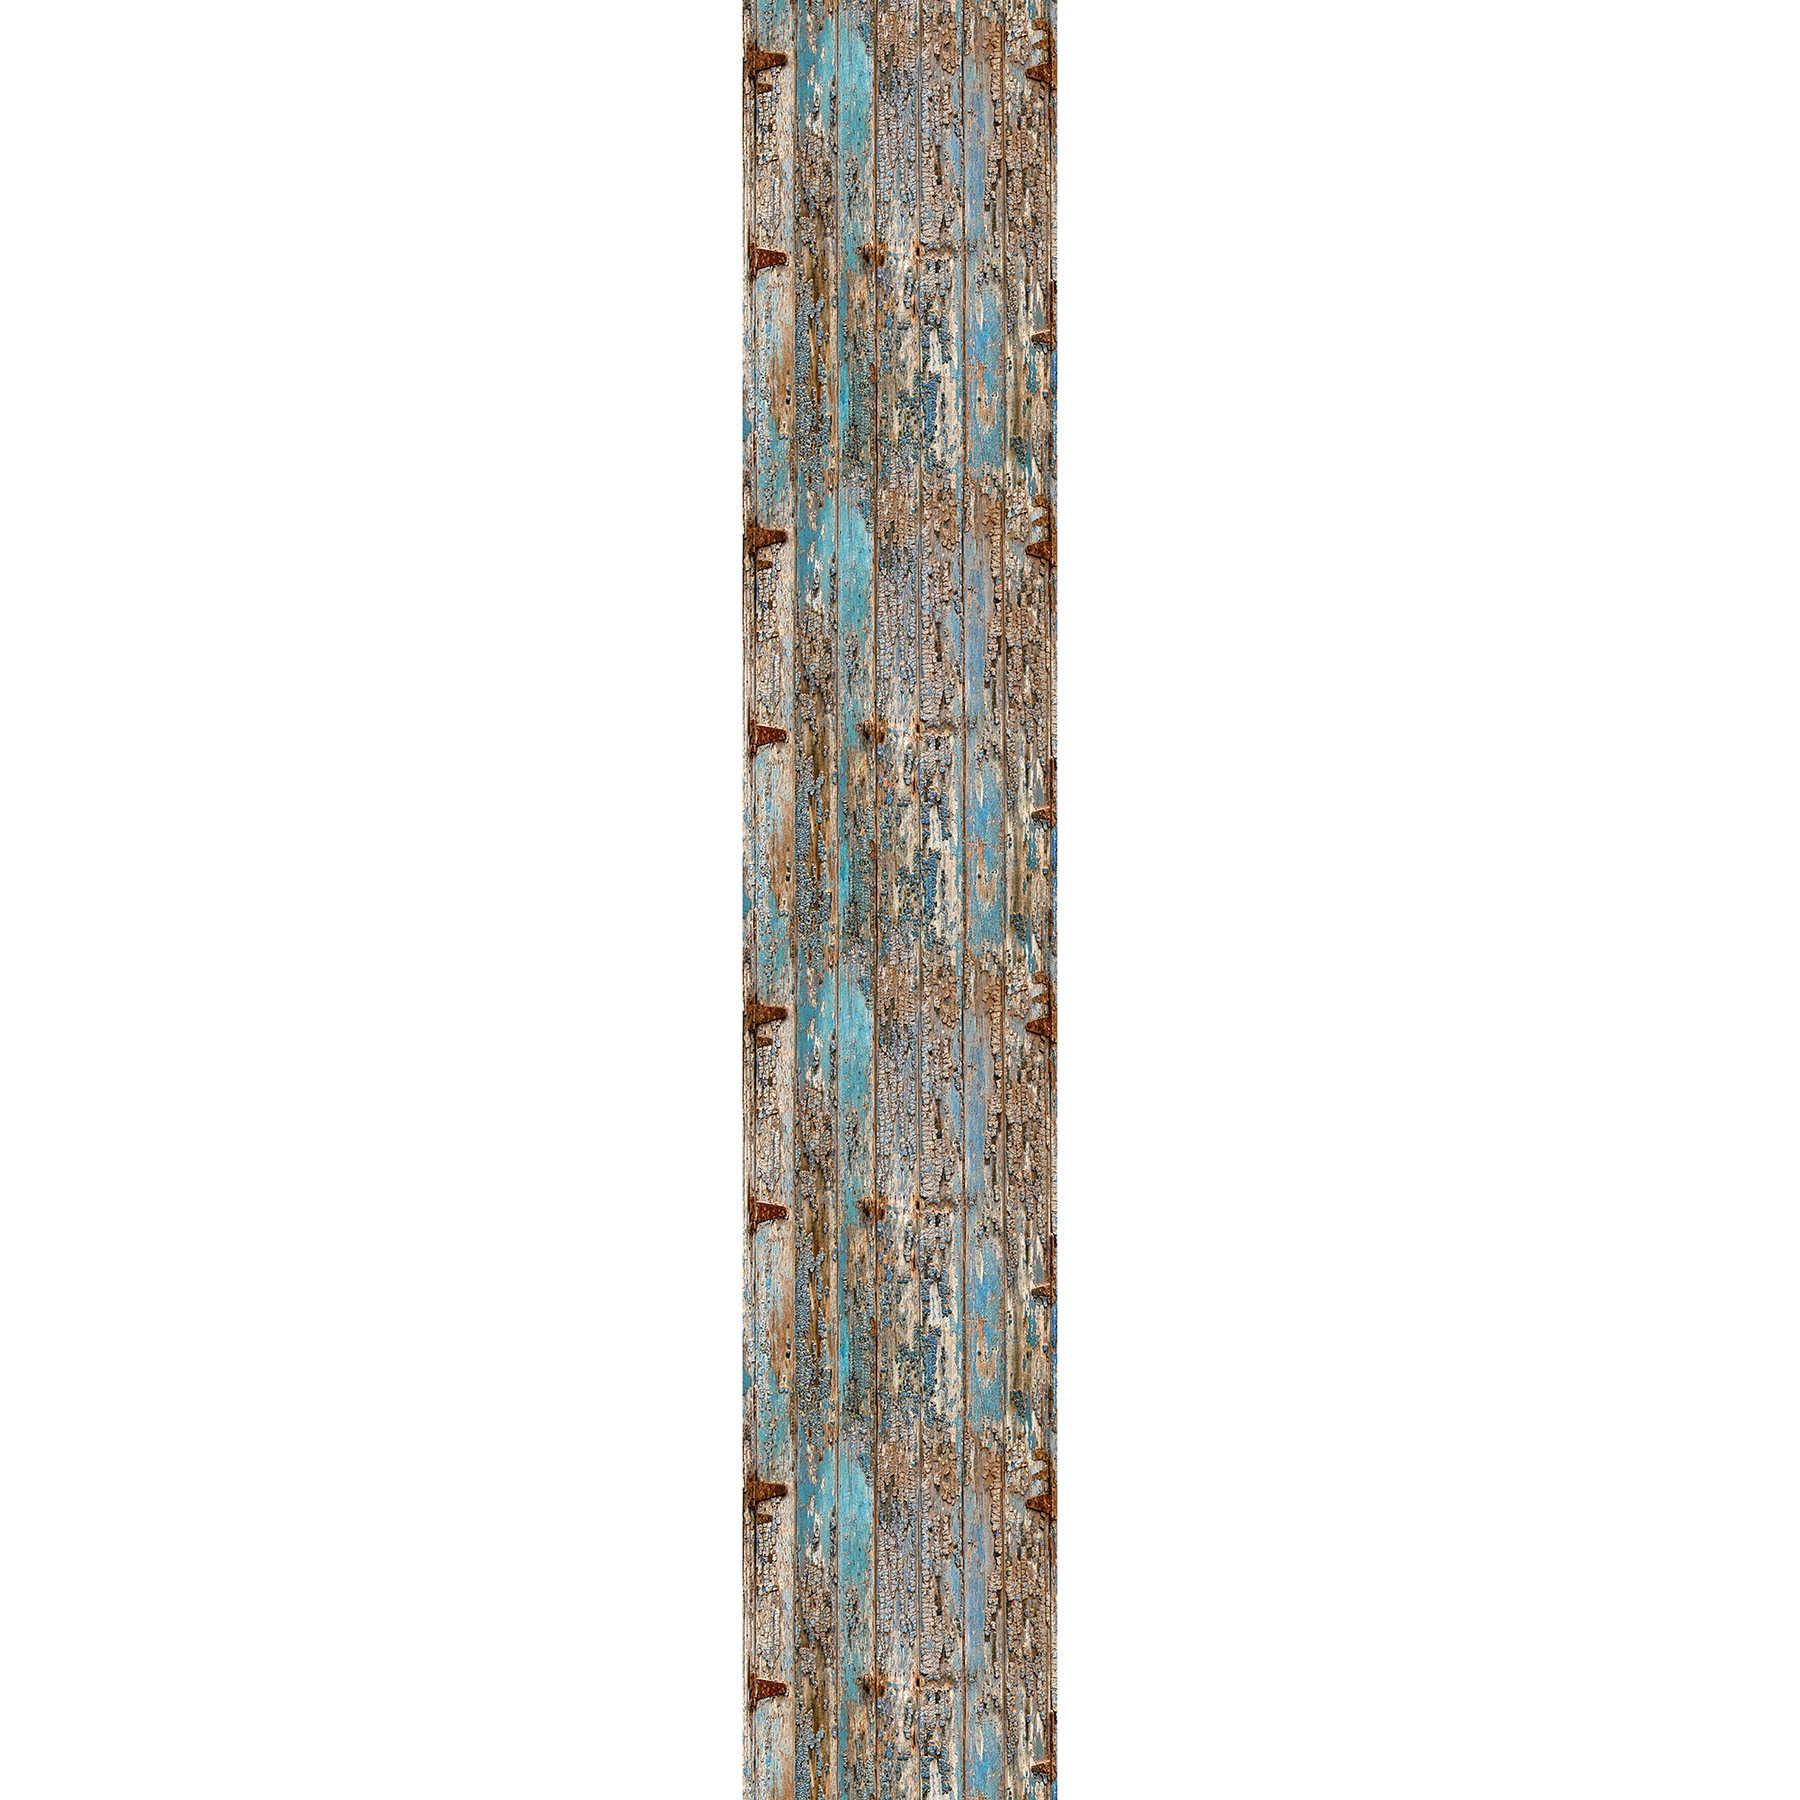         Motif wallpaper wooden boards in used look, Shabby Chic style - blue, beige, grey
    